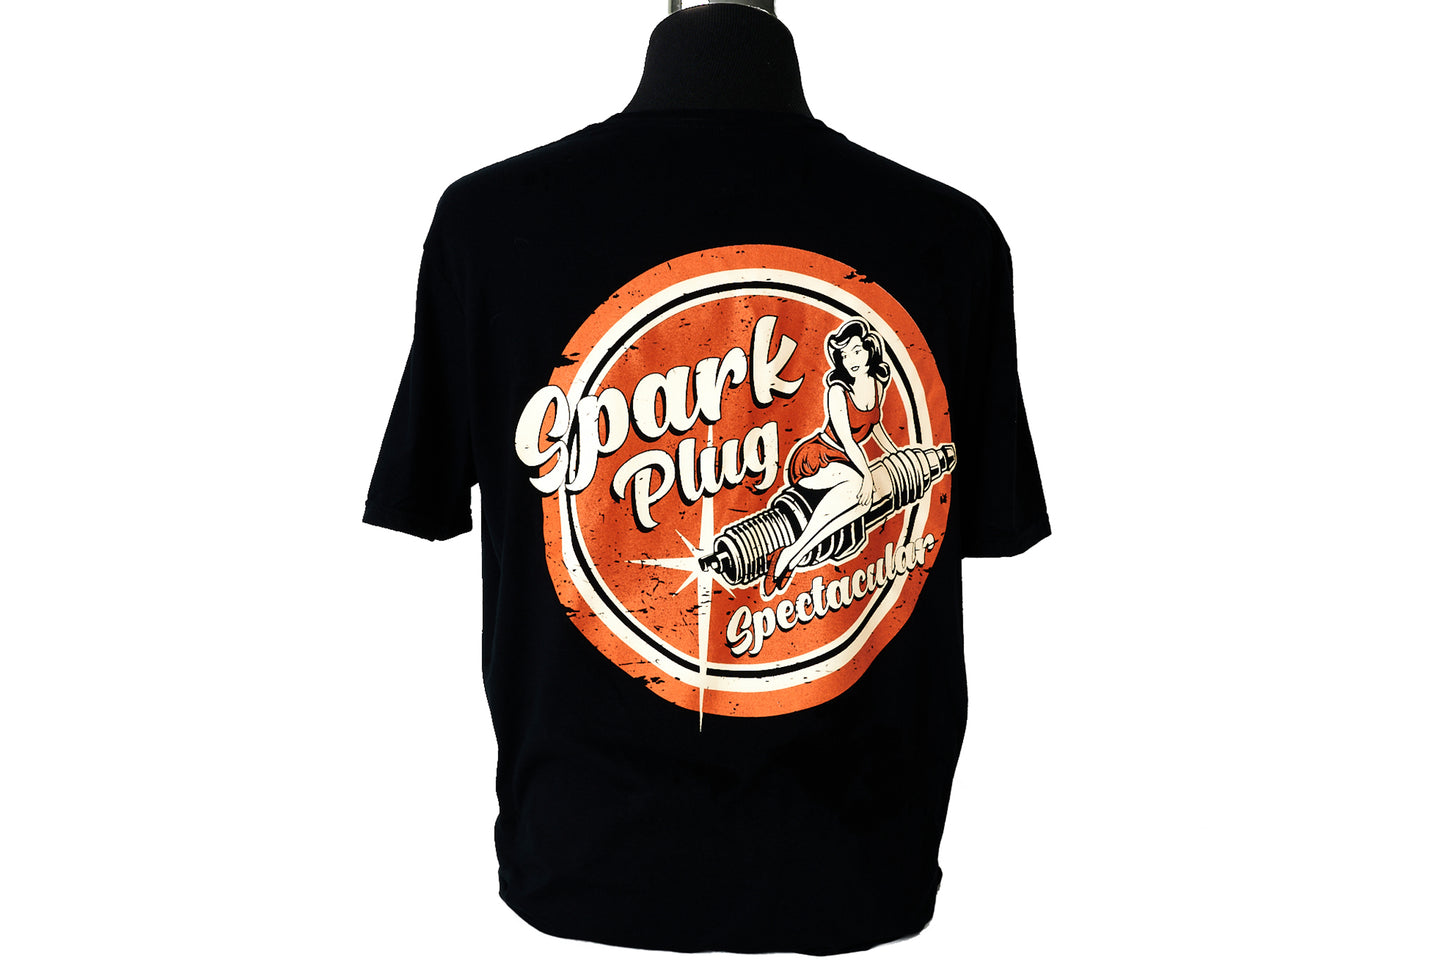 Sparkplug Spectacular Black T-Shirt Size XL & XXL